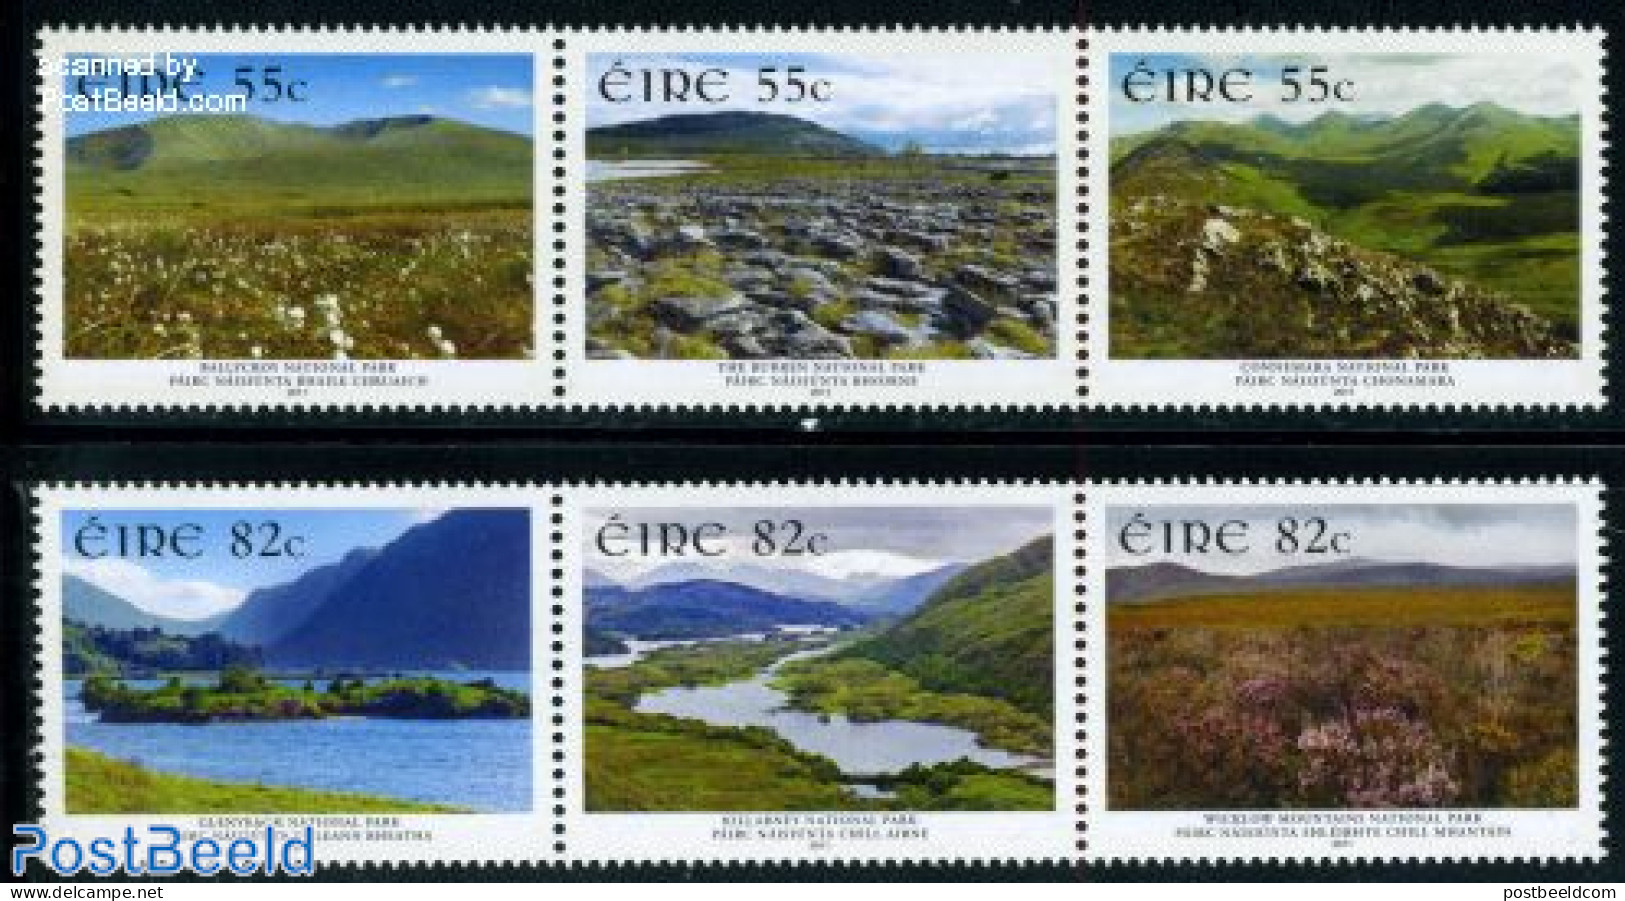 Ireland 2011 National Parks 6v (2 X [::]), Mint NH - Ongebruikt